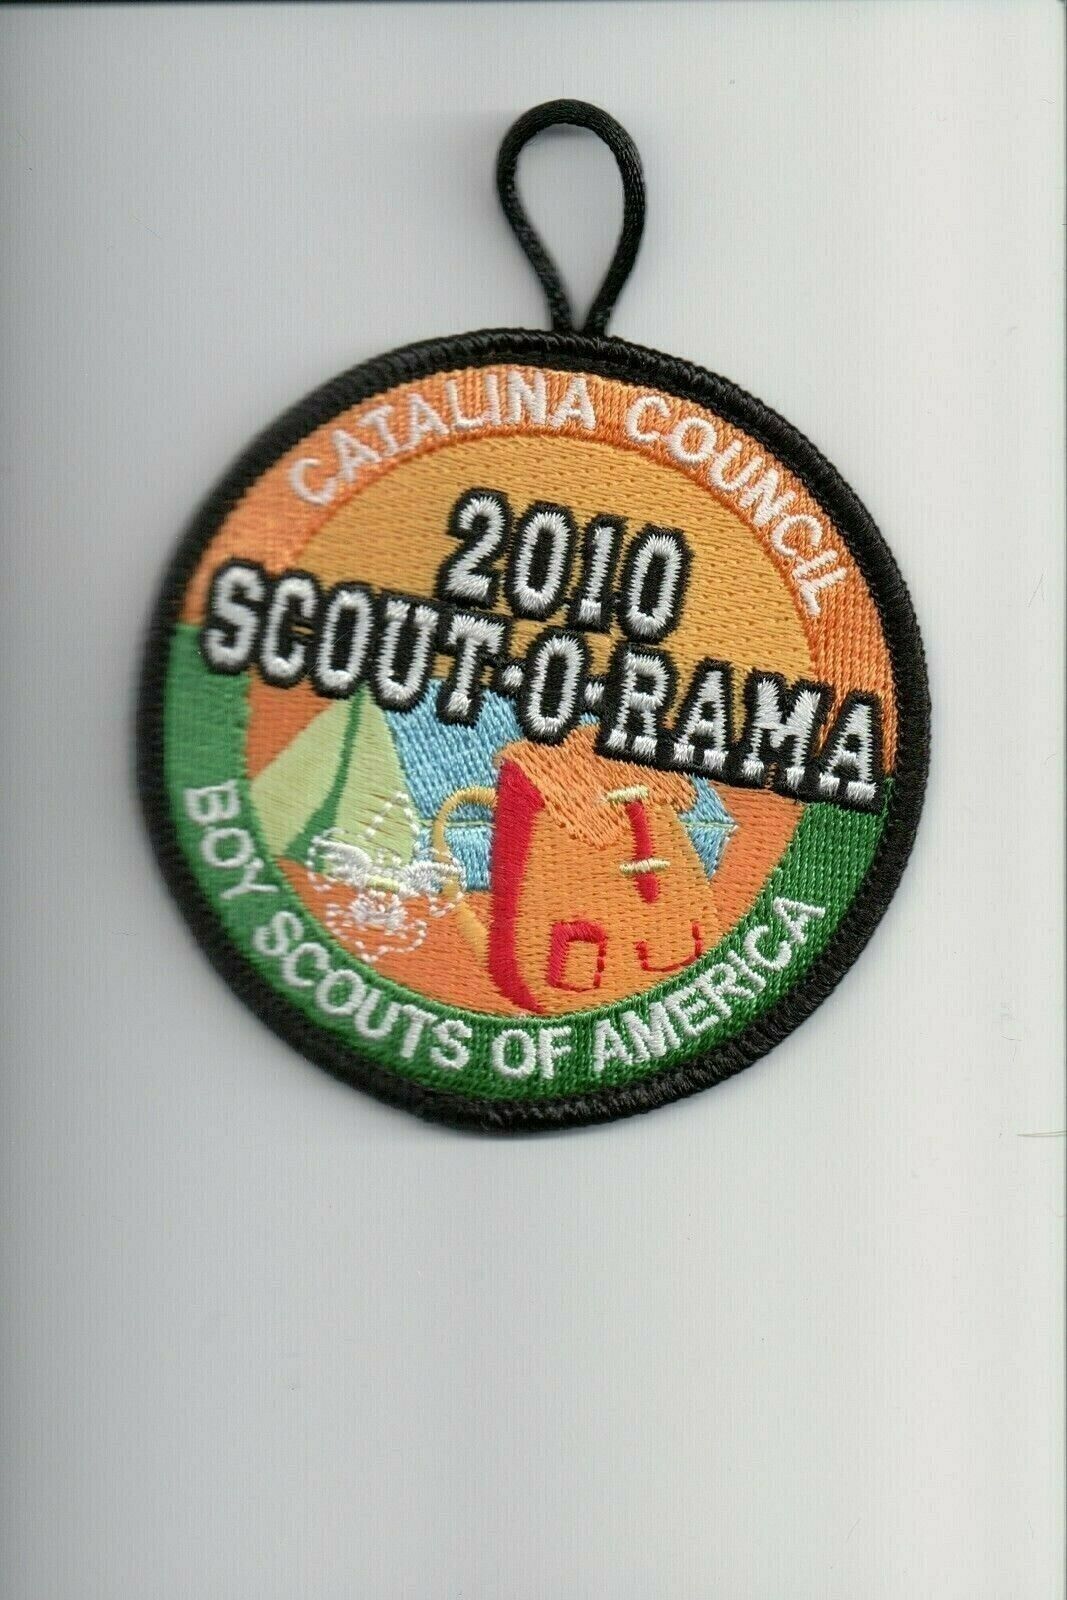 2010 Catalina Council Scout-O-Rama patch